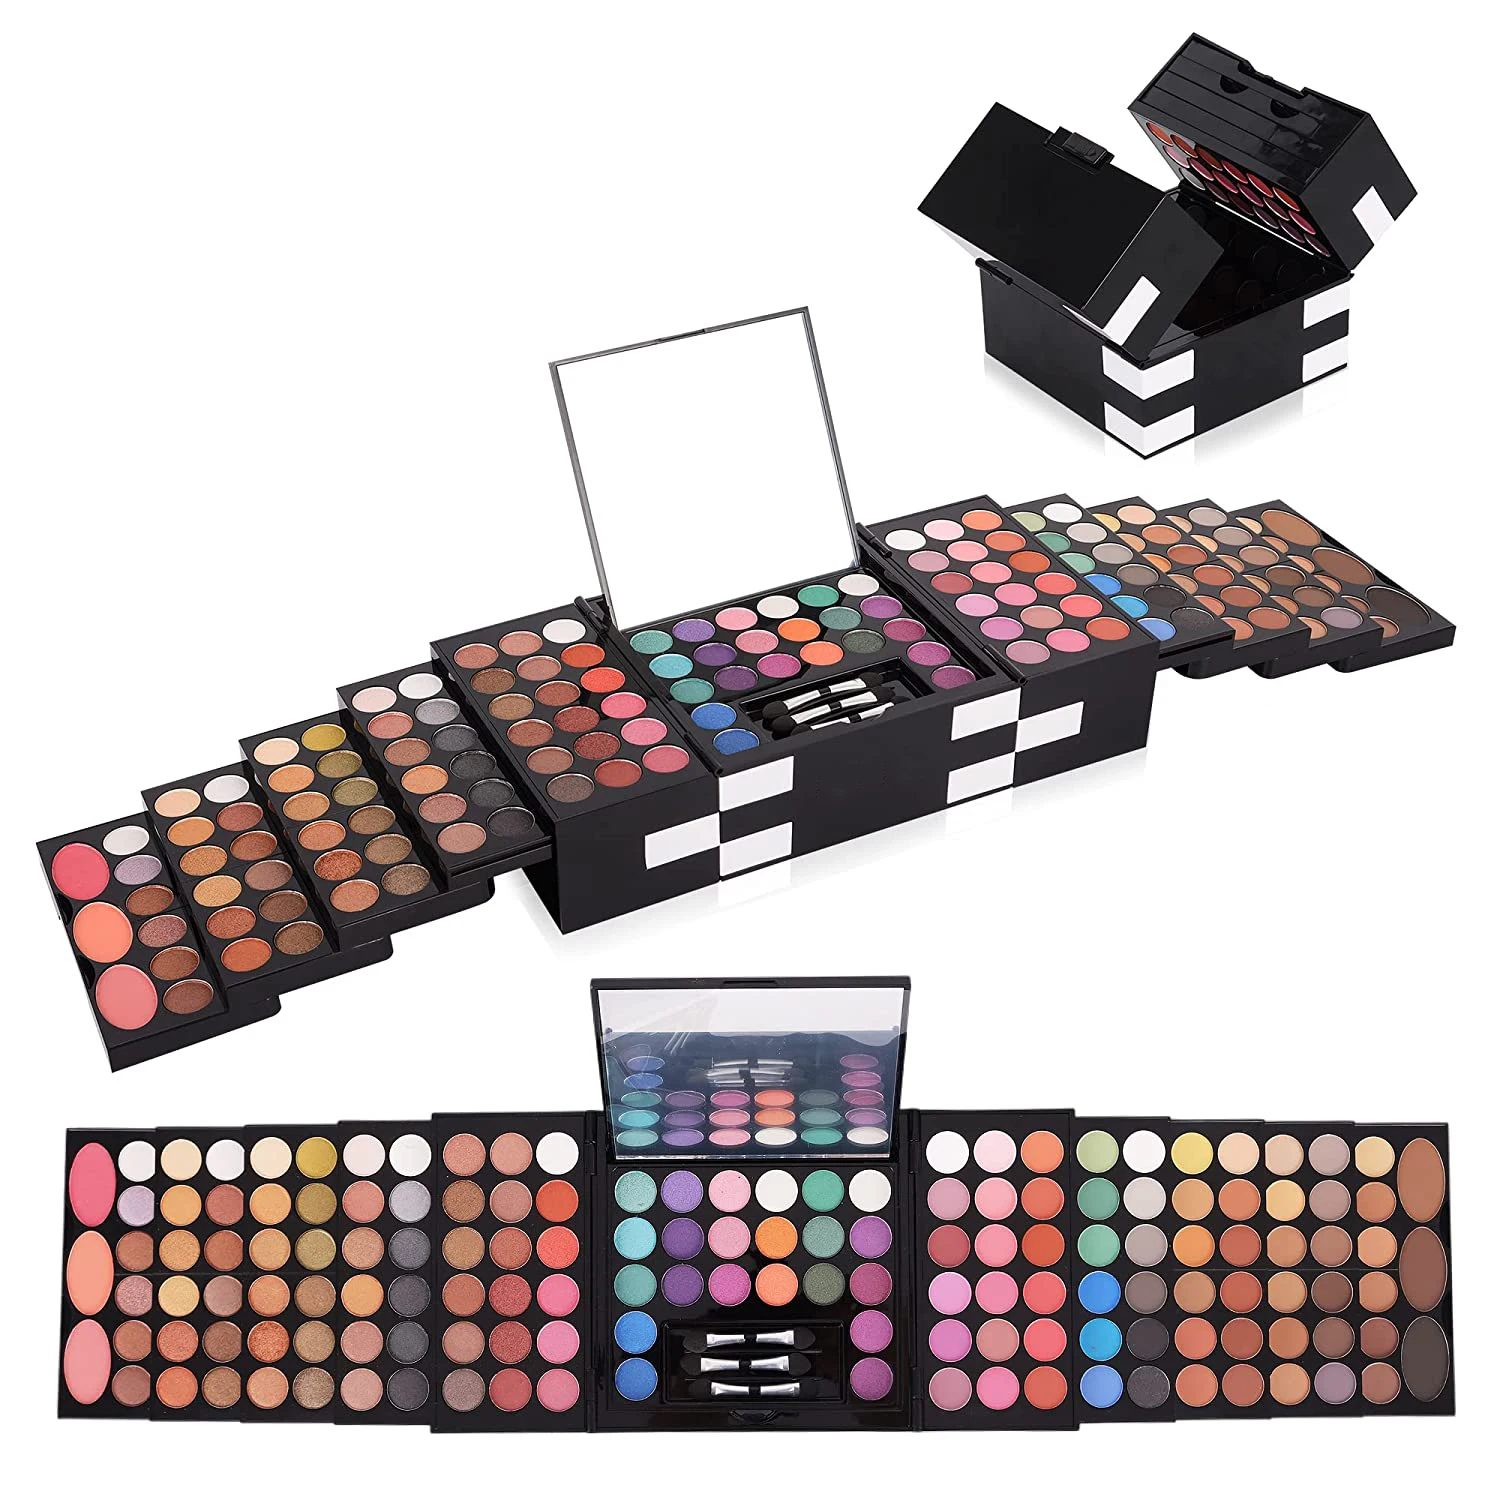 Makeup cosmetics 142 Colors Cosmetics Full Eyeshadow Palette makeup mirror Makeup sets